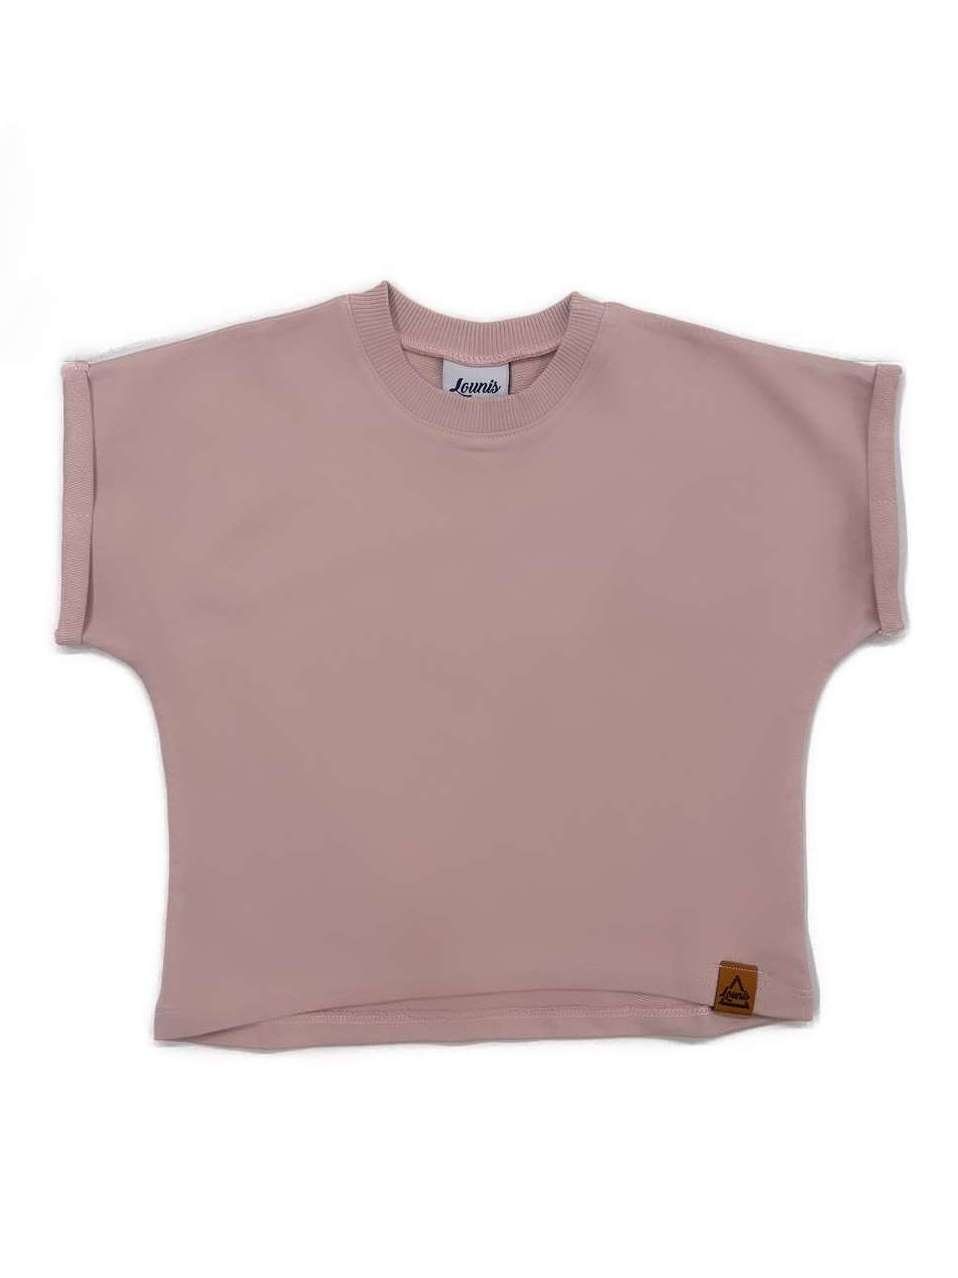 Babys Kindershirt Kleinkinder T-Shirt - Lounis Altrosa Oversize-Shirt aus - & - Baumwolle